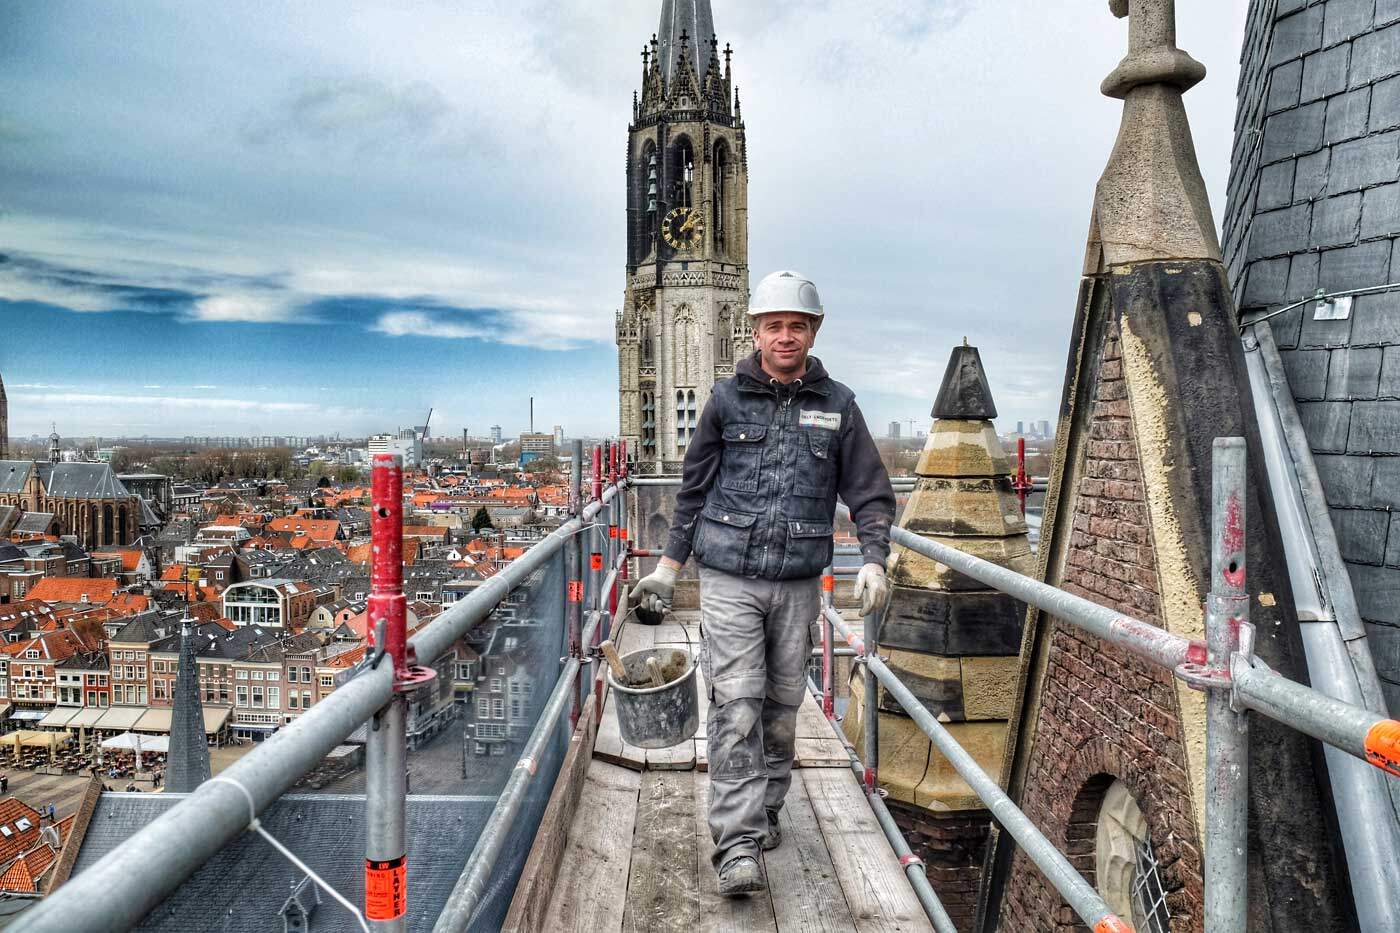 Restauratie Torens Maria van Jessekerk – Delft - Orly & Endevoets